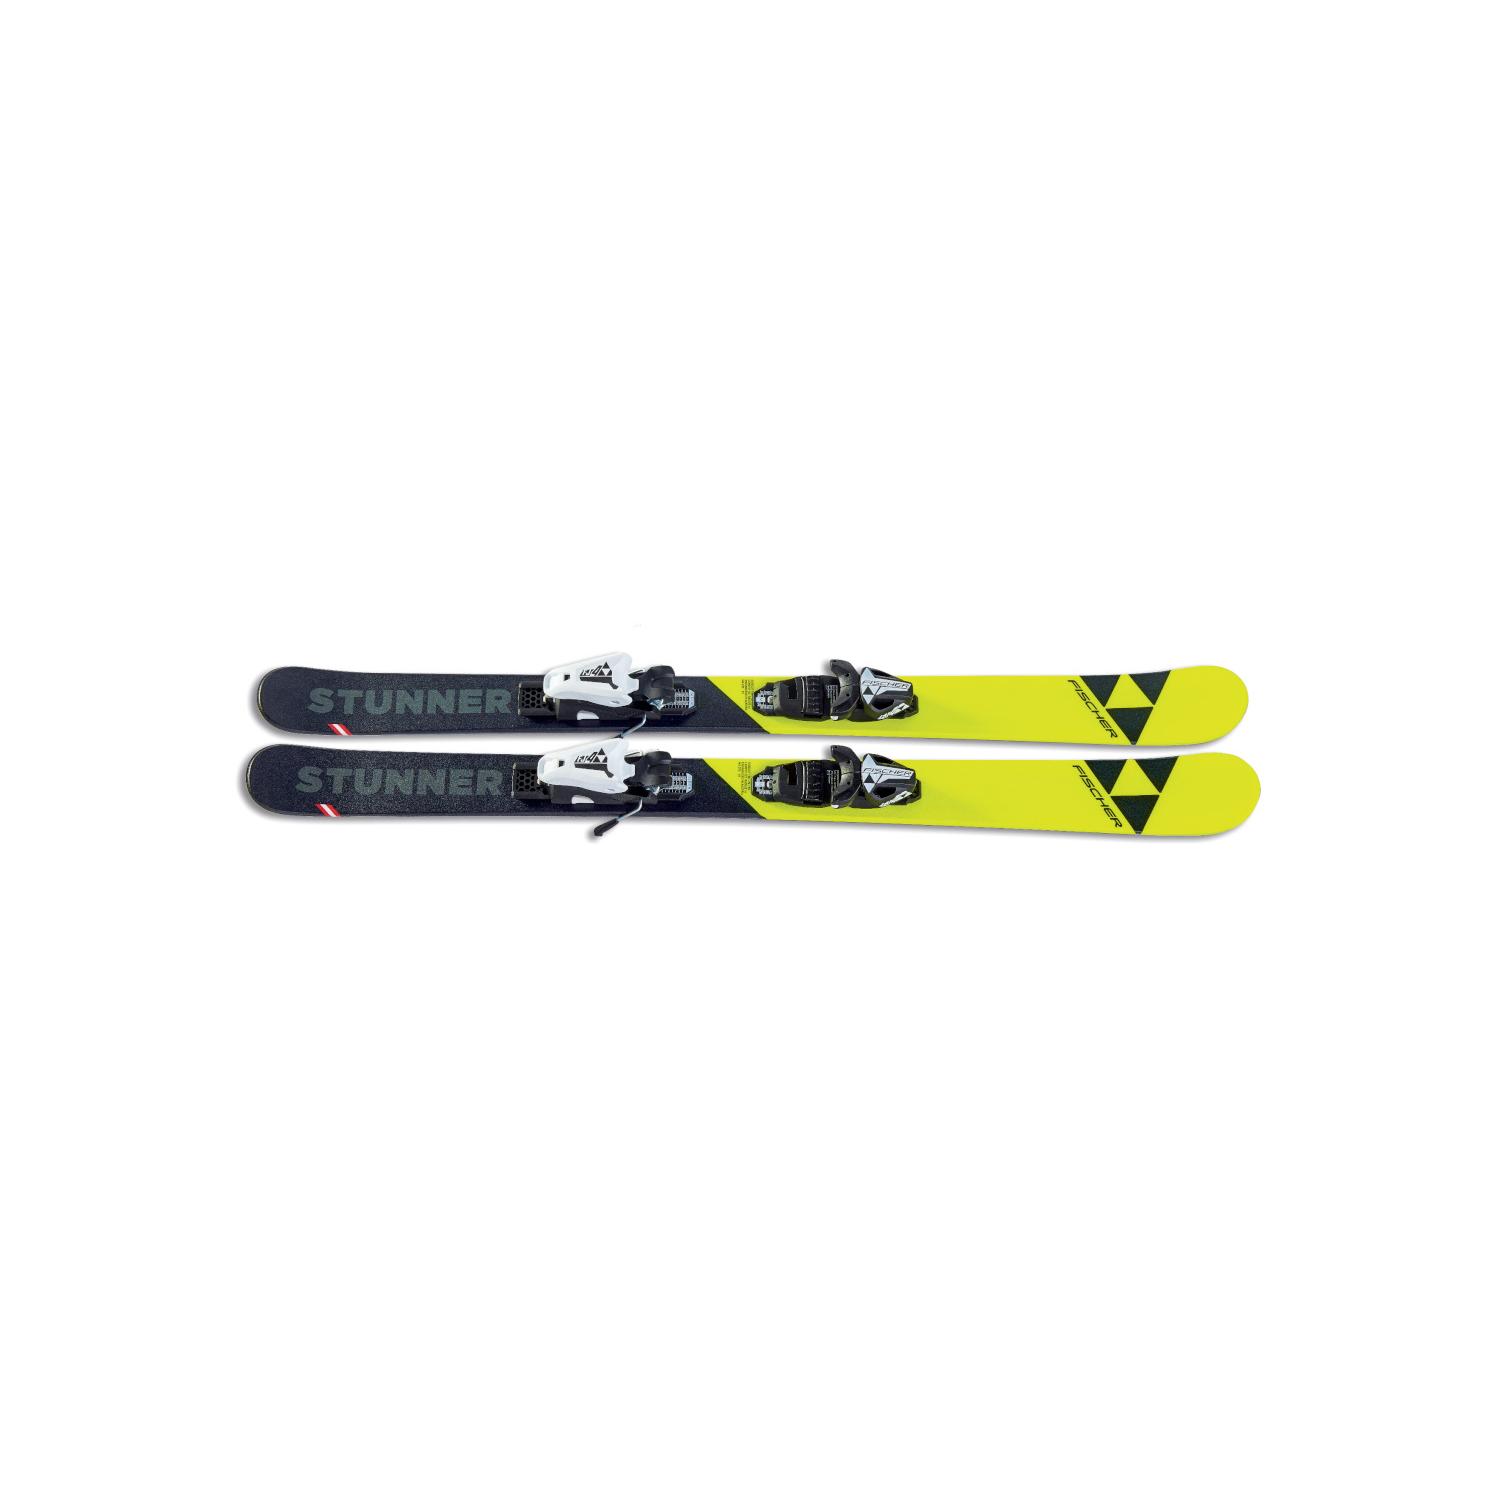 Горные лыжи с креплениями Fischer 2018-19 STUNNER SLR 2 JR \ FJ7 AC SLR BRAKE 78 [H] черн./бел.